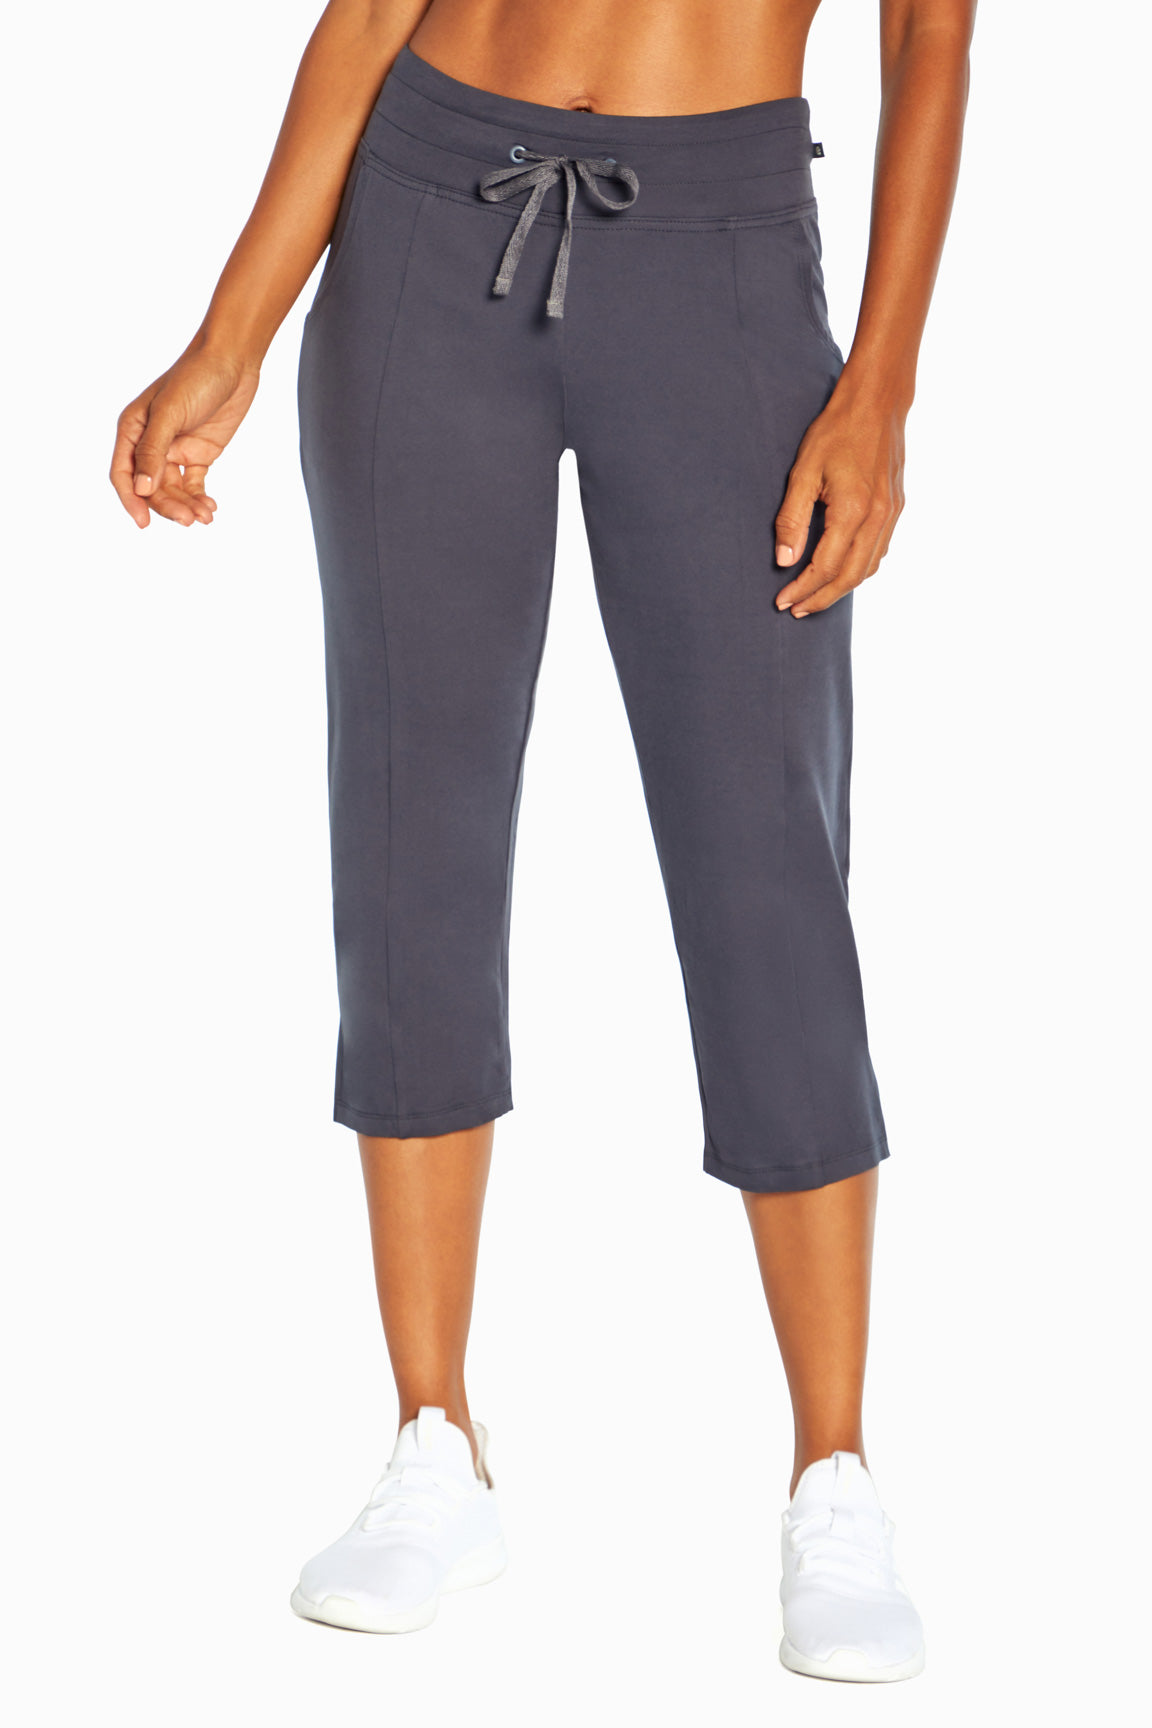 Athletic Works Women's Athleisure Core Knit Capri Pant Size XS (0